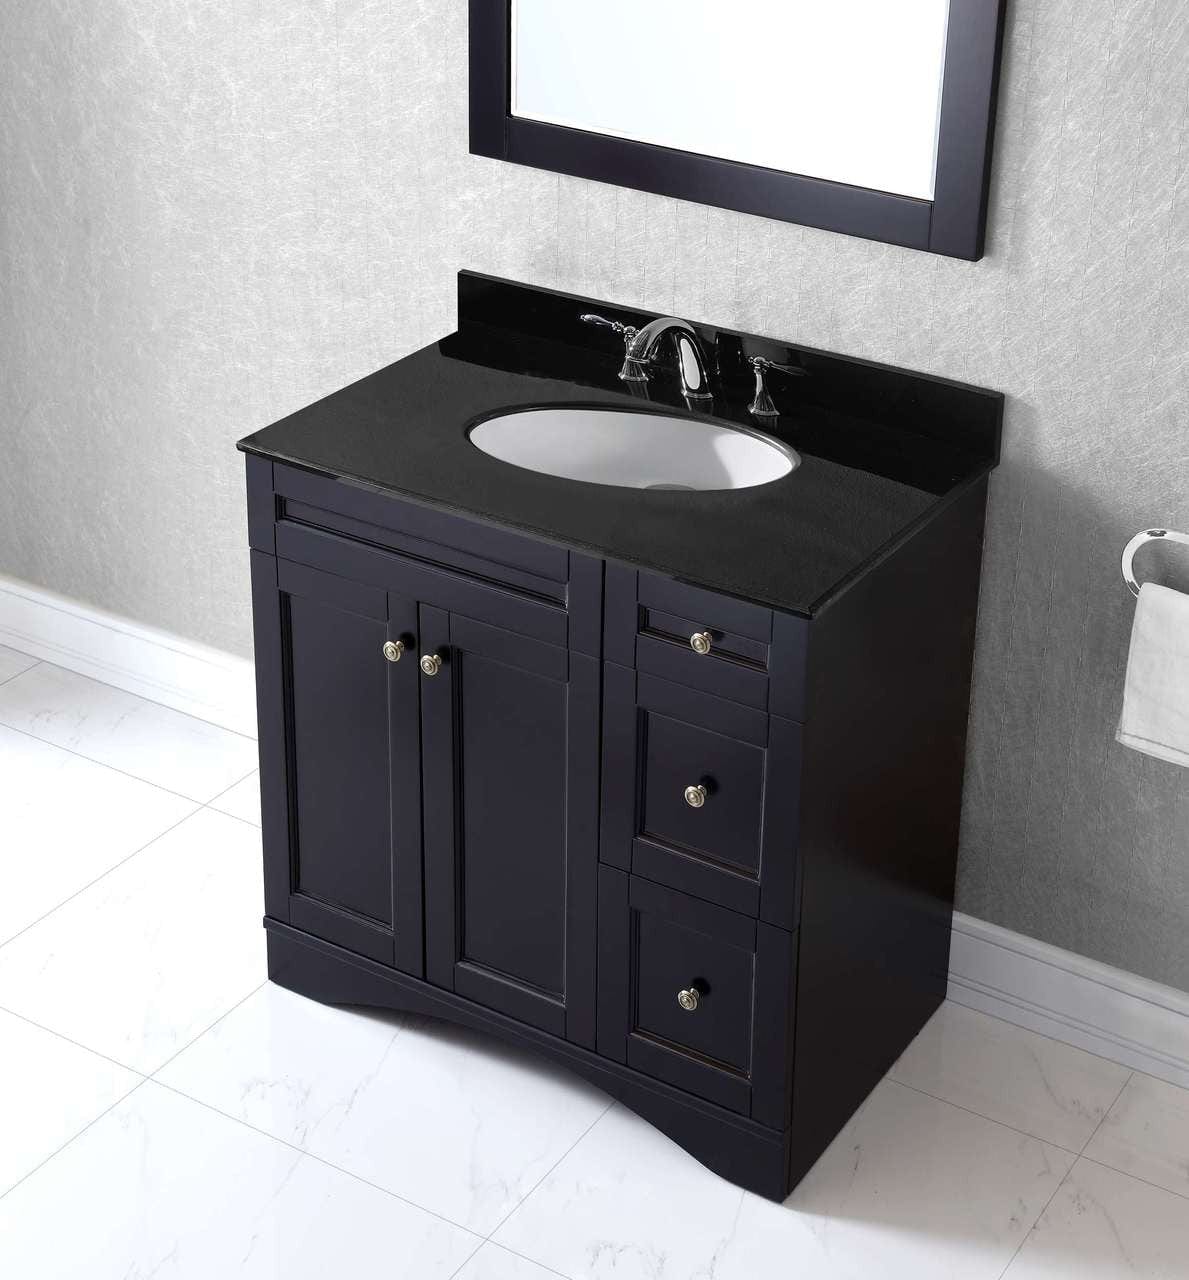 Virtu USA Elise 36 Single Bathroom Vanity Set in Espresso w/ Black Galaxy Granite Counter-Top | Round Basin